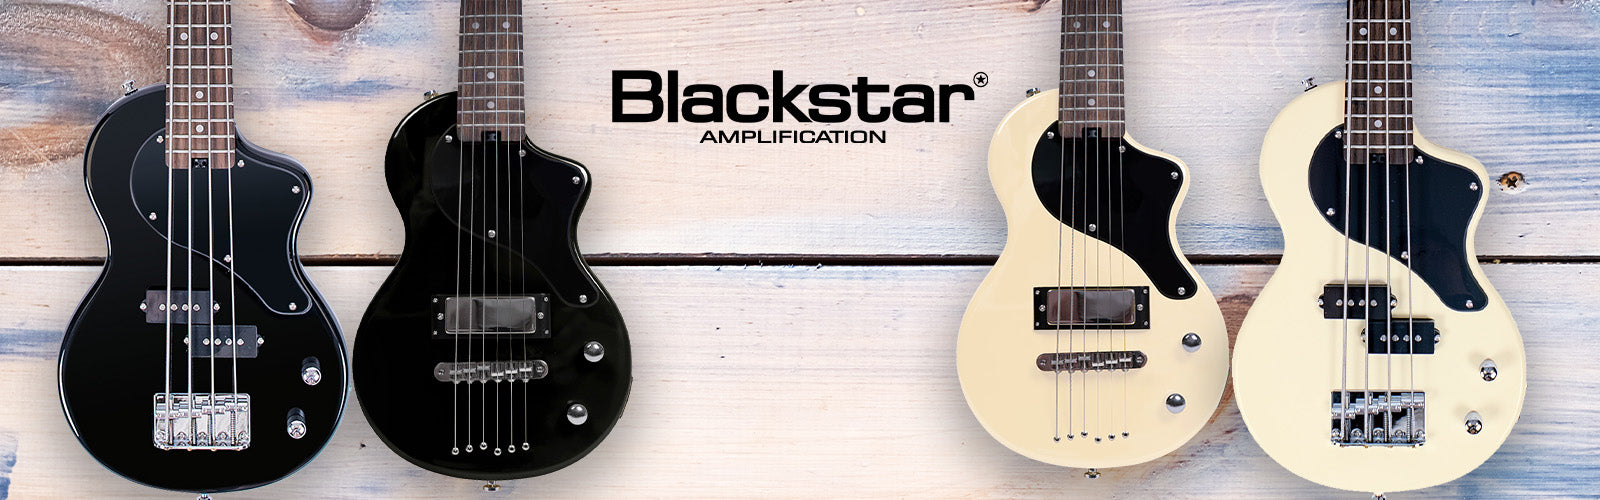 Blackstar Carry On Guitars